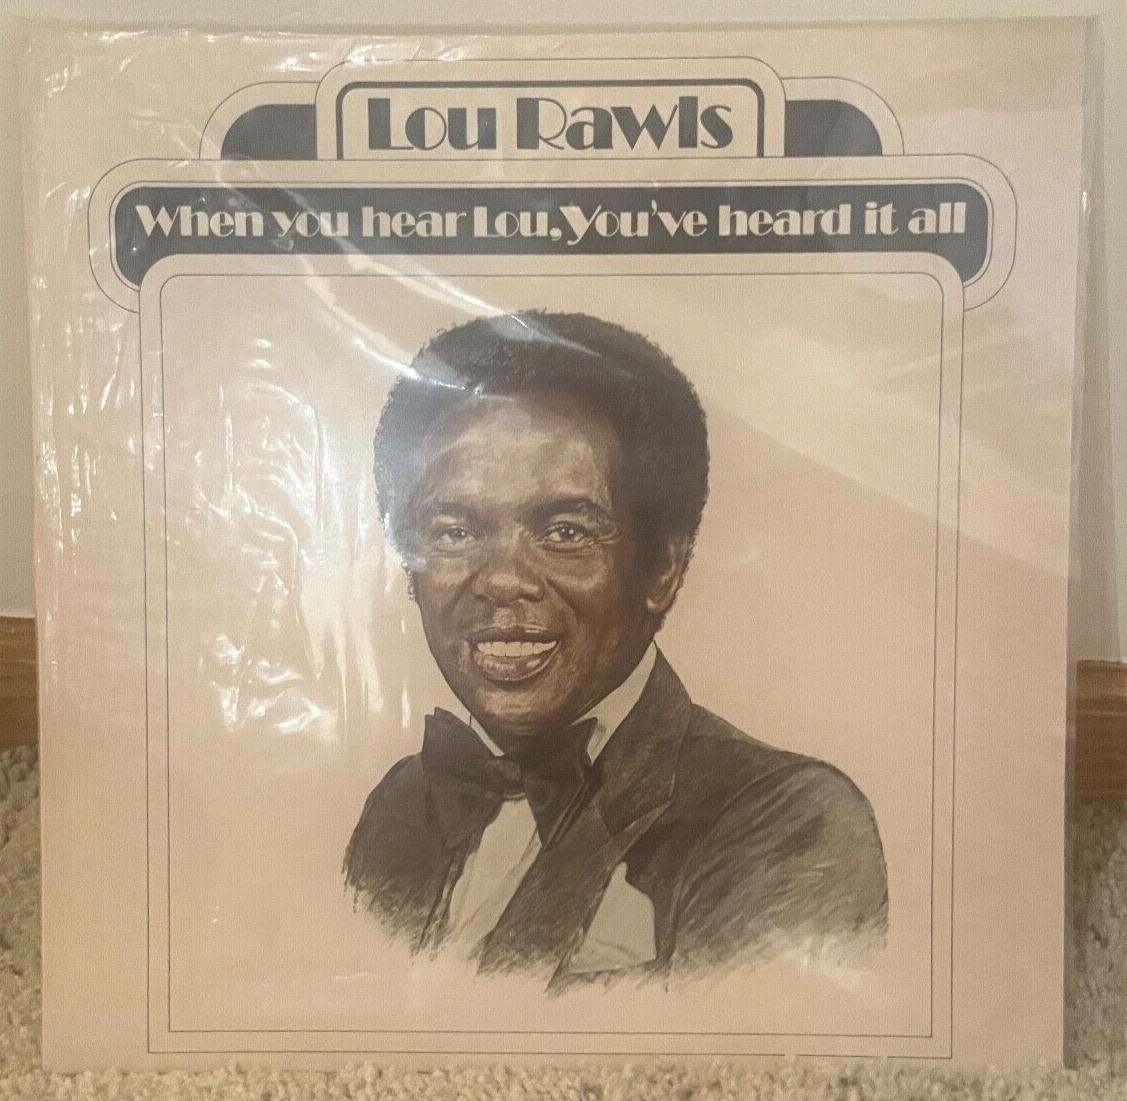 LOU RAWLS LP - When You Hear Lou, You've Heard It All 1977 Philadelphia